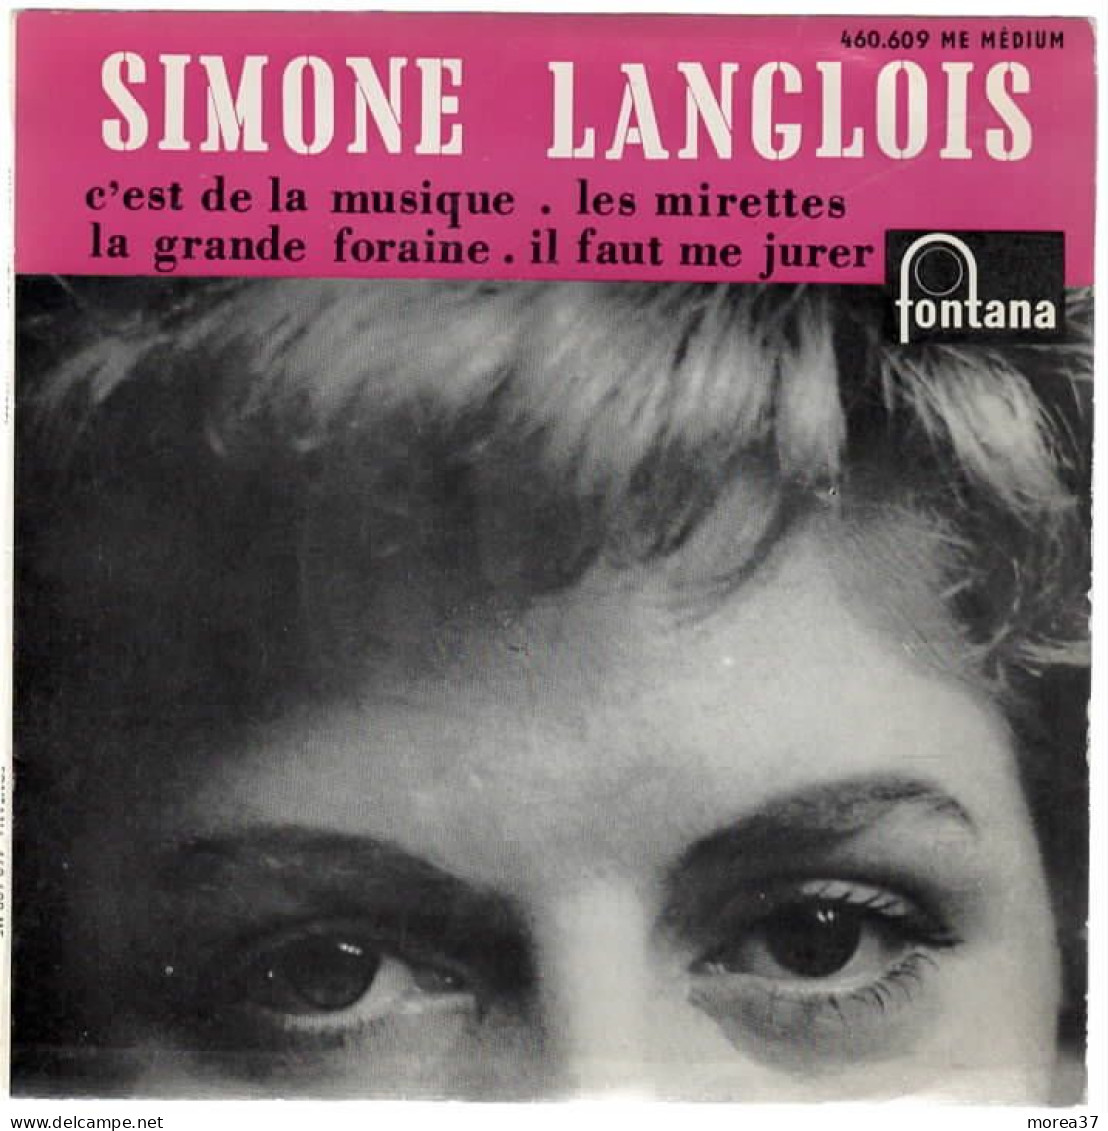 SIMONE LANGLOIS   Les Mirettes    FONTANA  460.609 ME - Altri - Francese